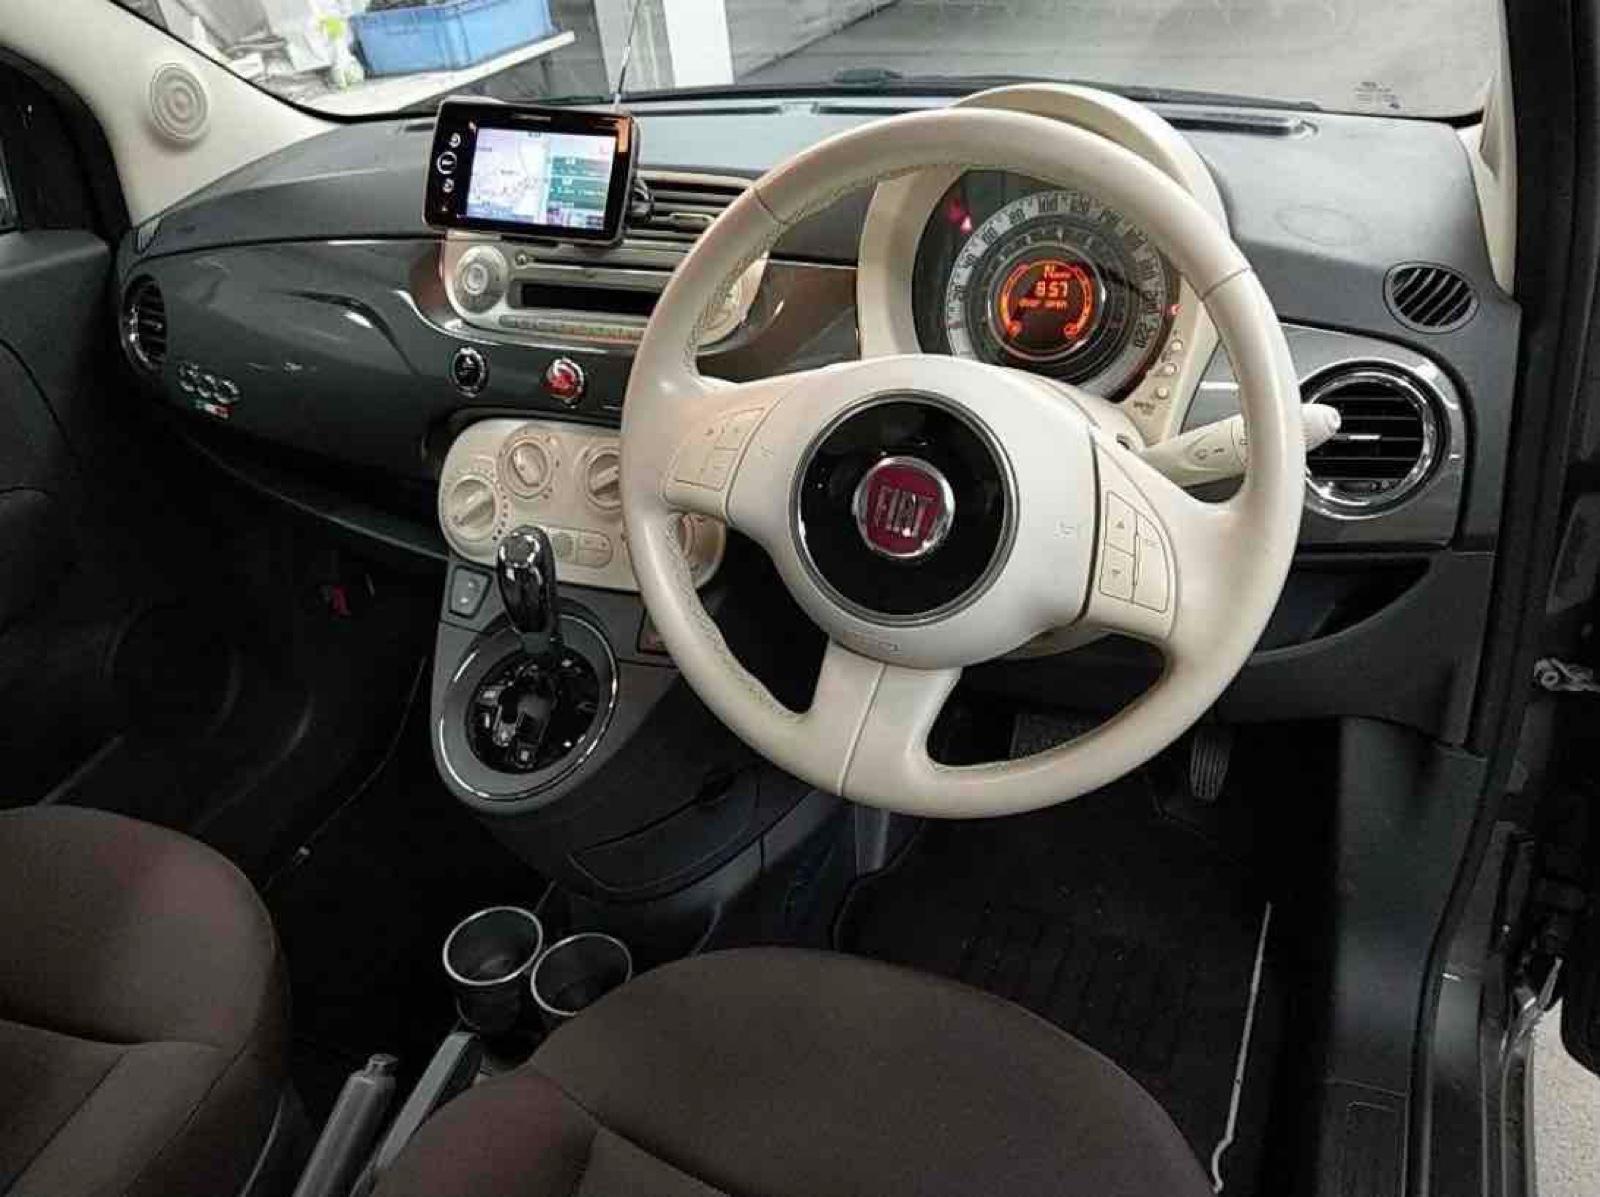 Fiat 500 STILE